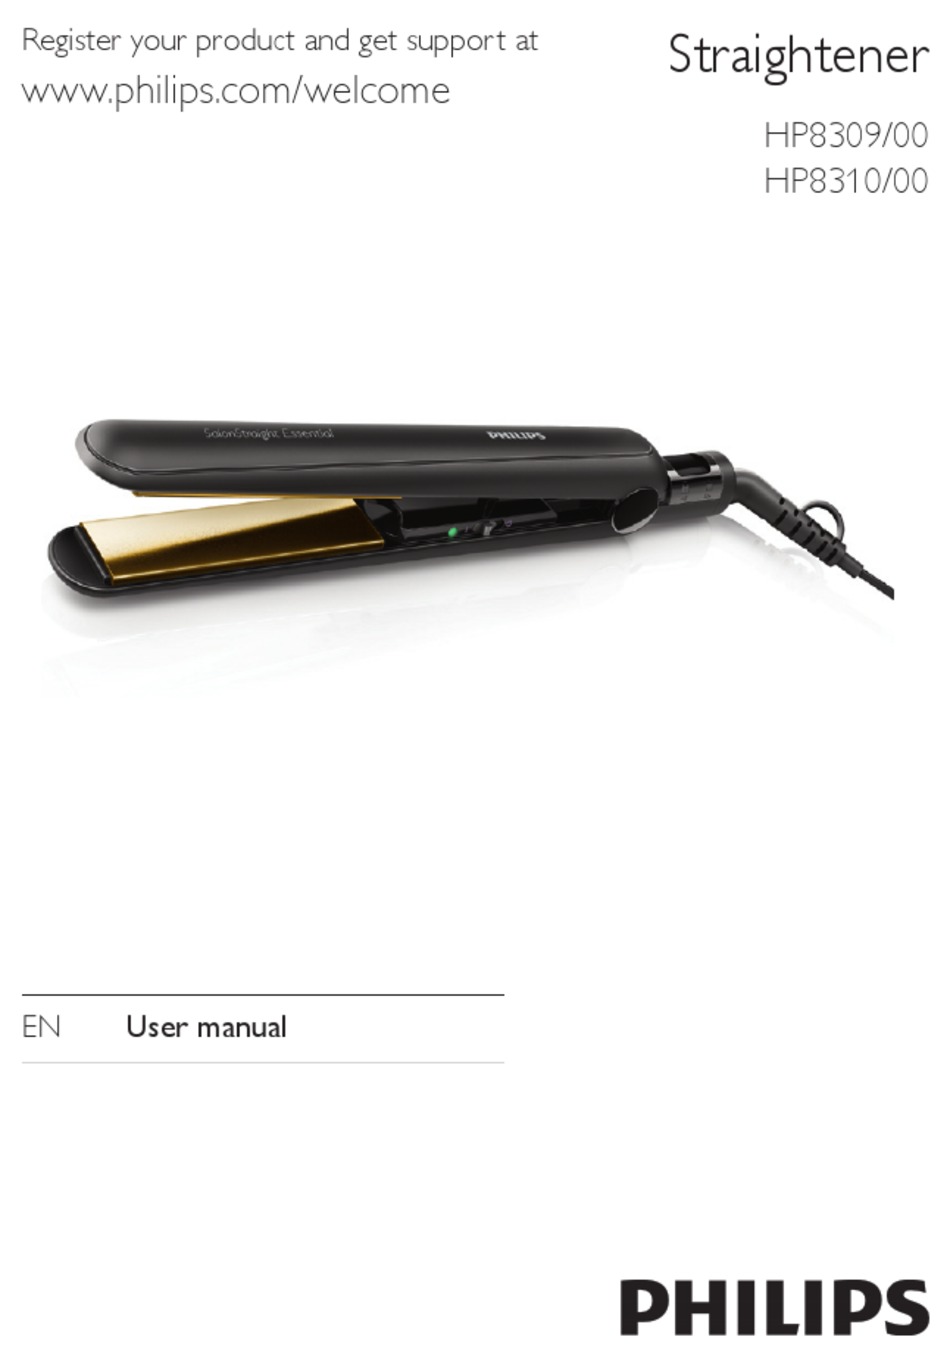 PHILIPS HP8309/00 HAIR STYLER USER MANUAL | ManualsLib